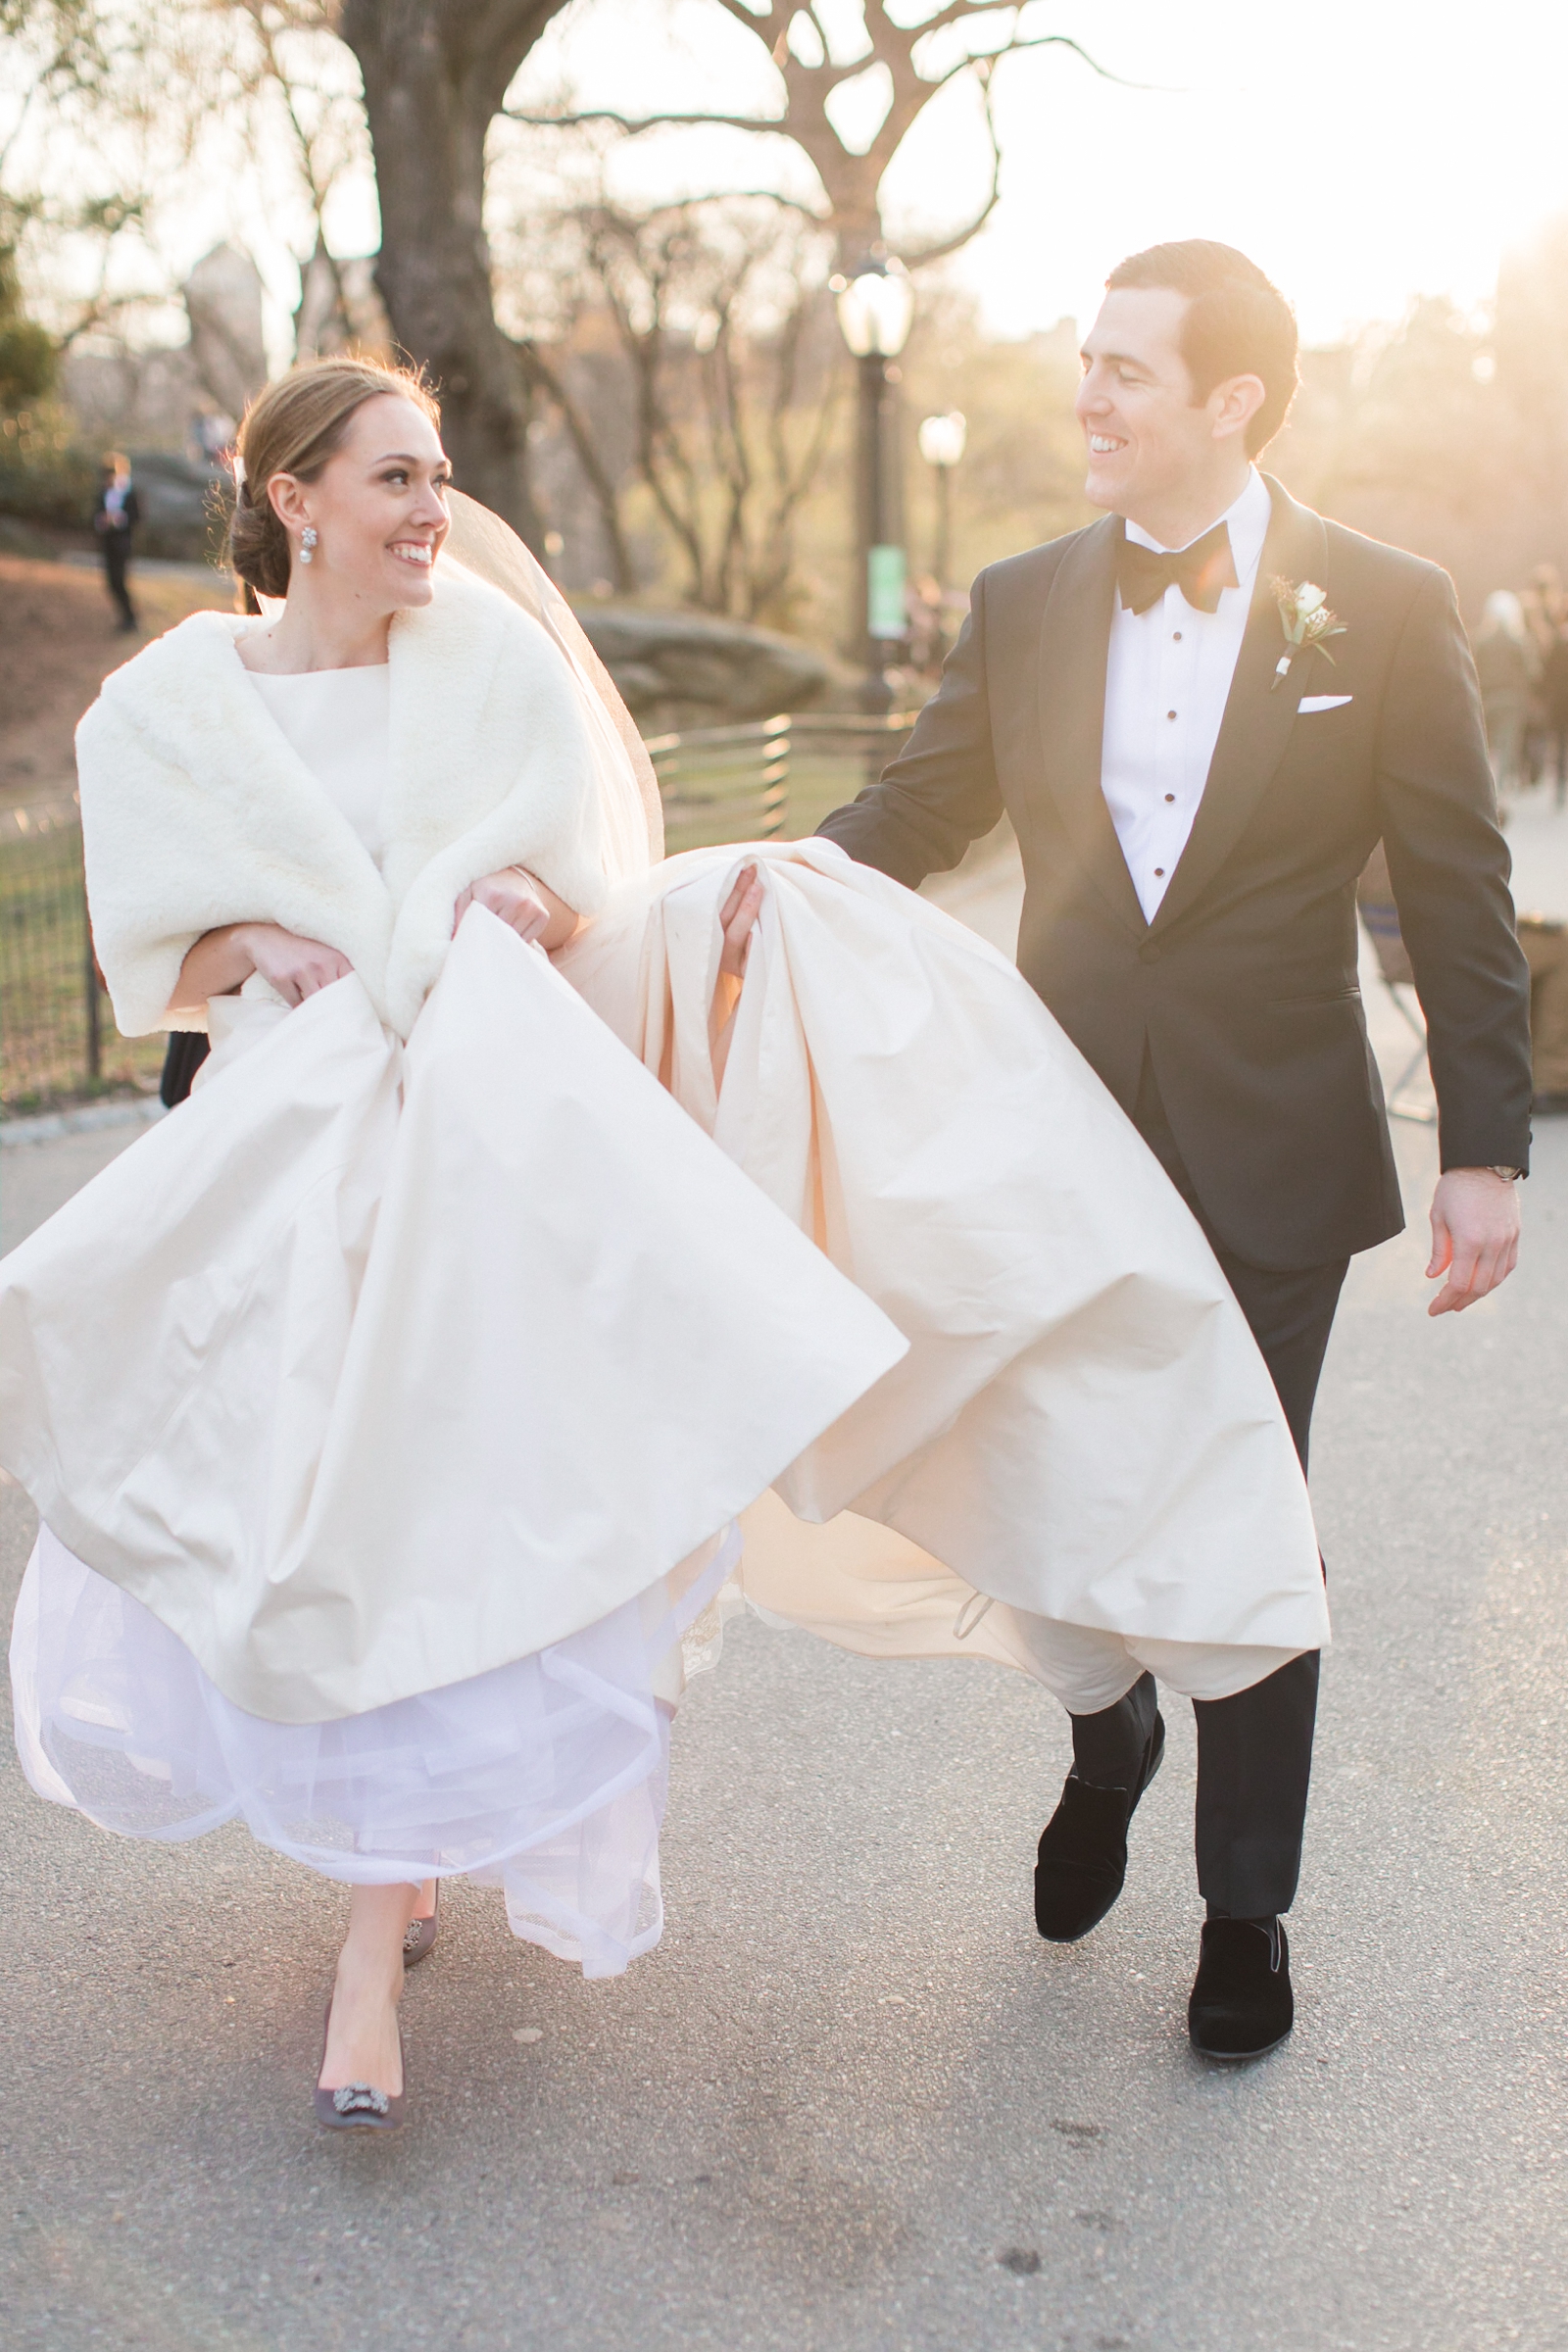 Central Park wedding day photo